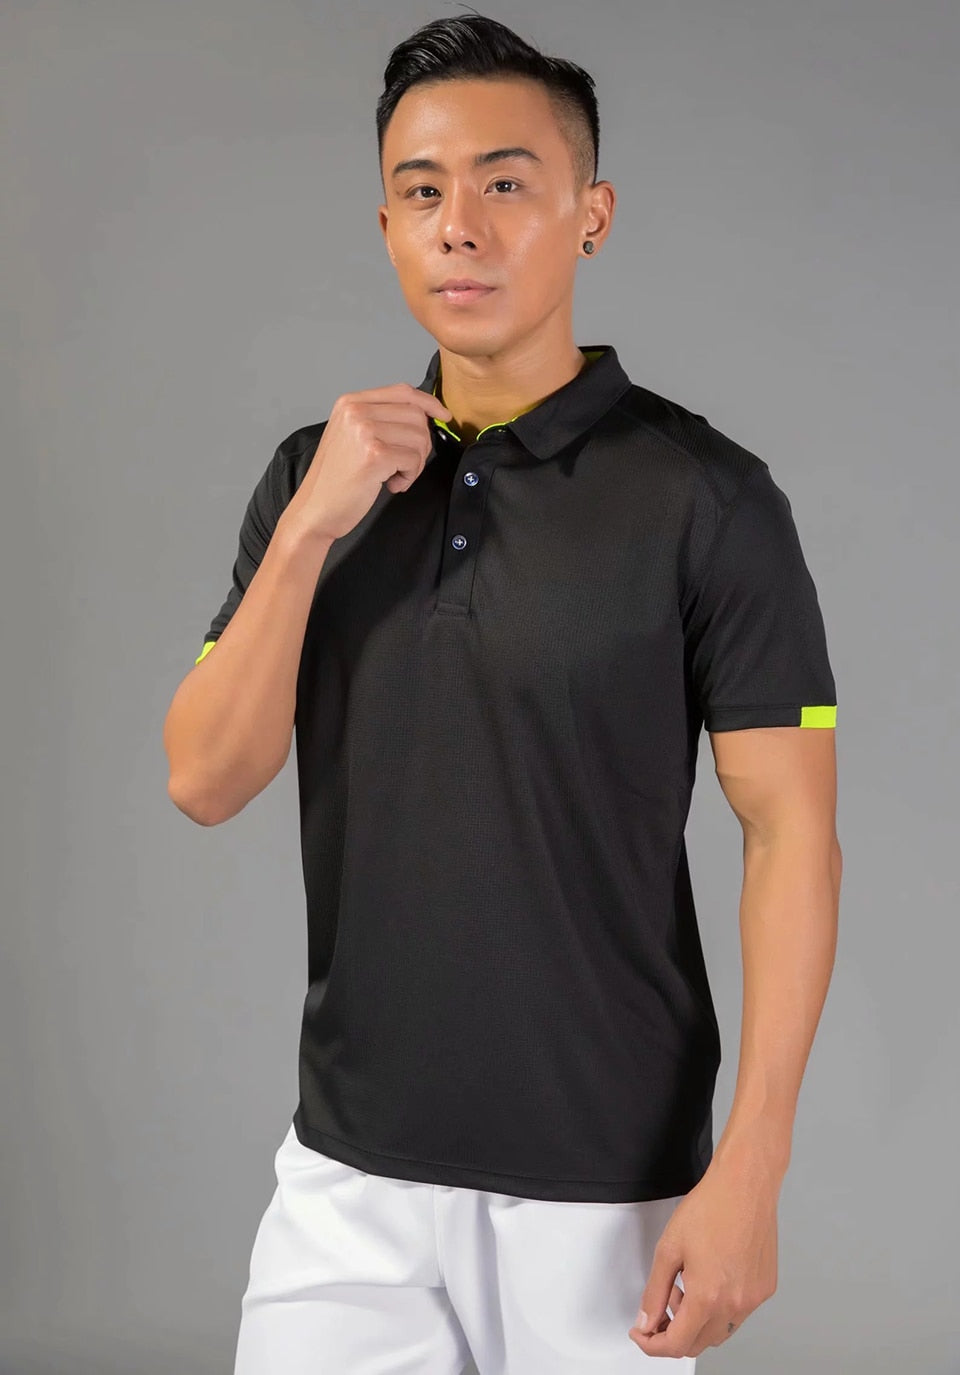 Men's Golf Tennis Outdoor Sportswear Short sleeve polo shirt Badminton T Shirt The Clothing Company Sydney